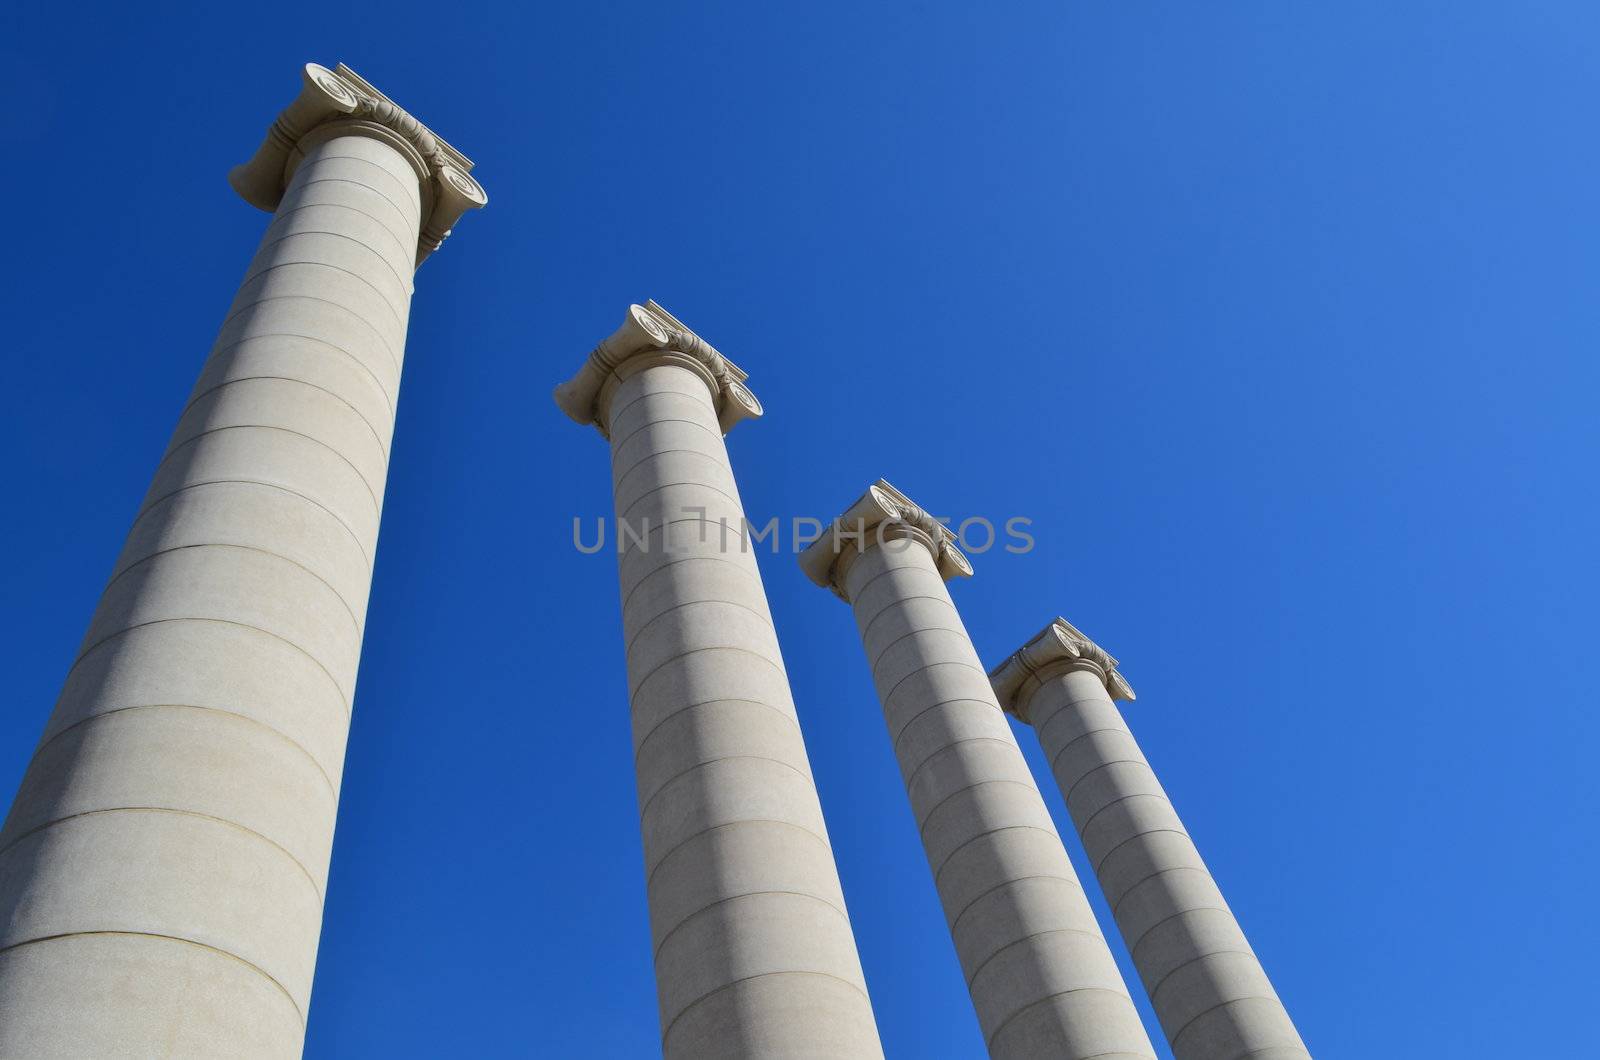 Four columns under a blue sky. by bunsview